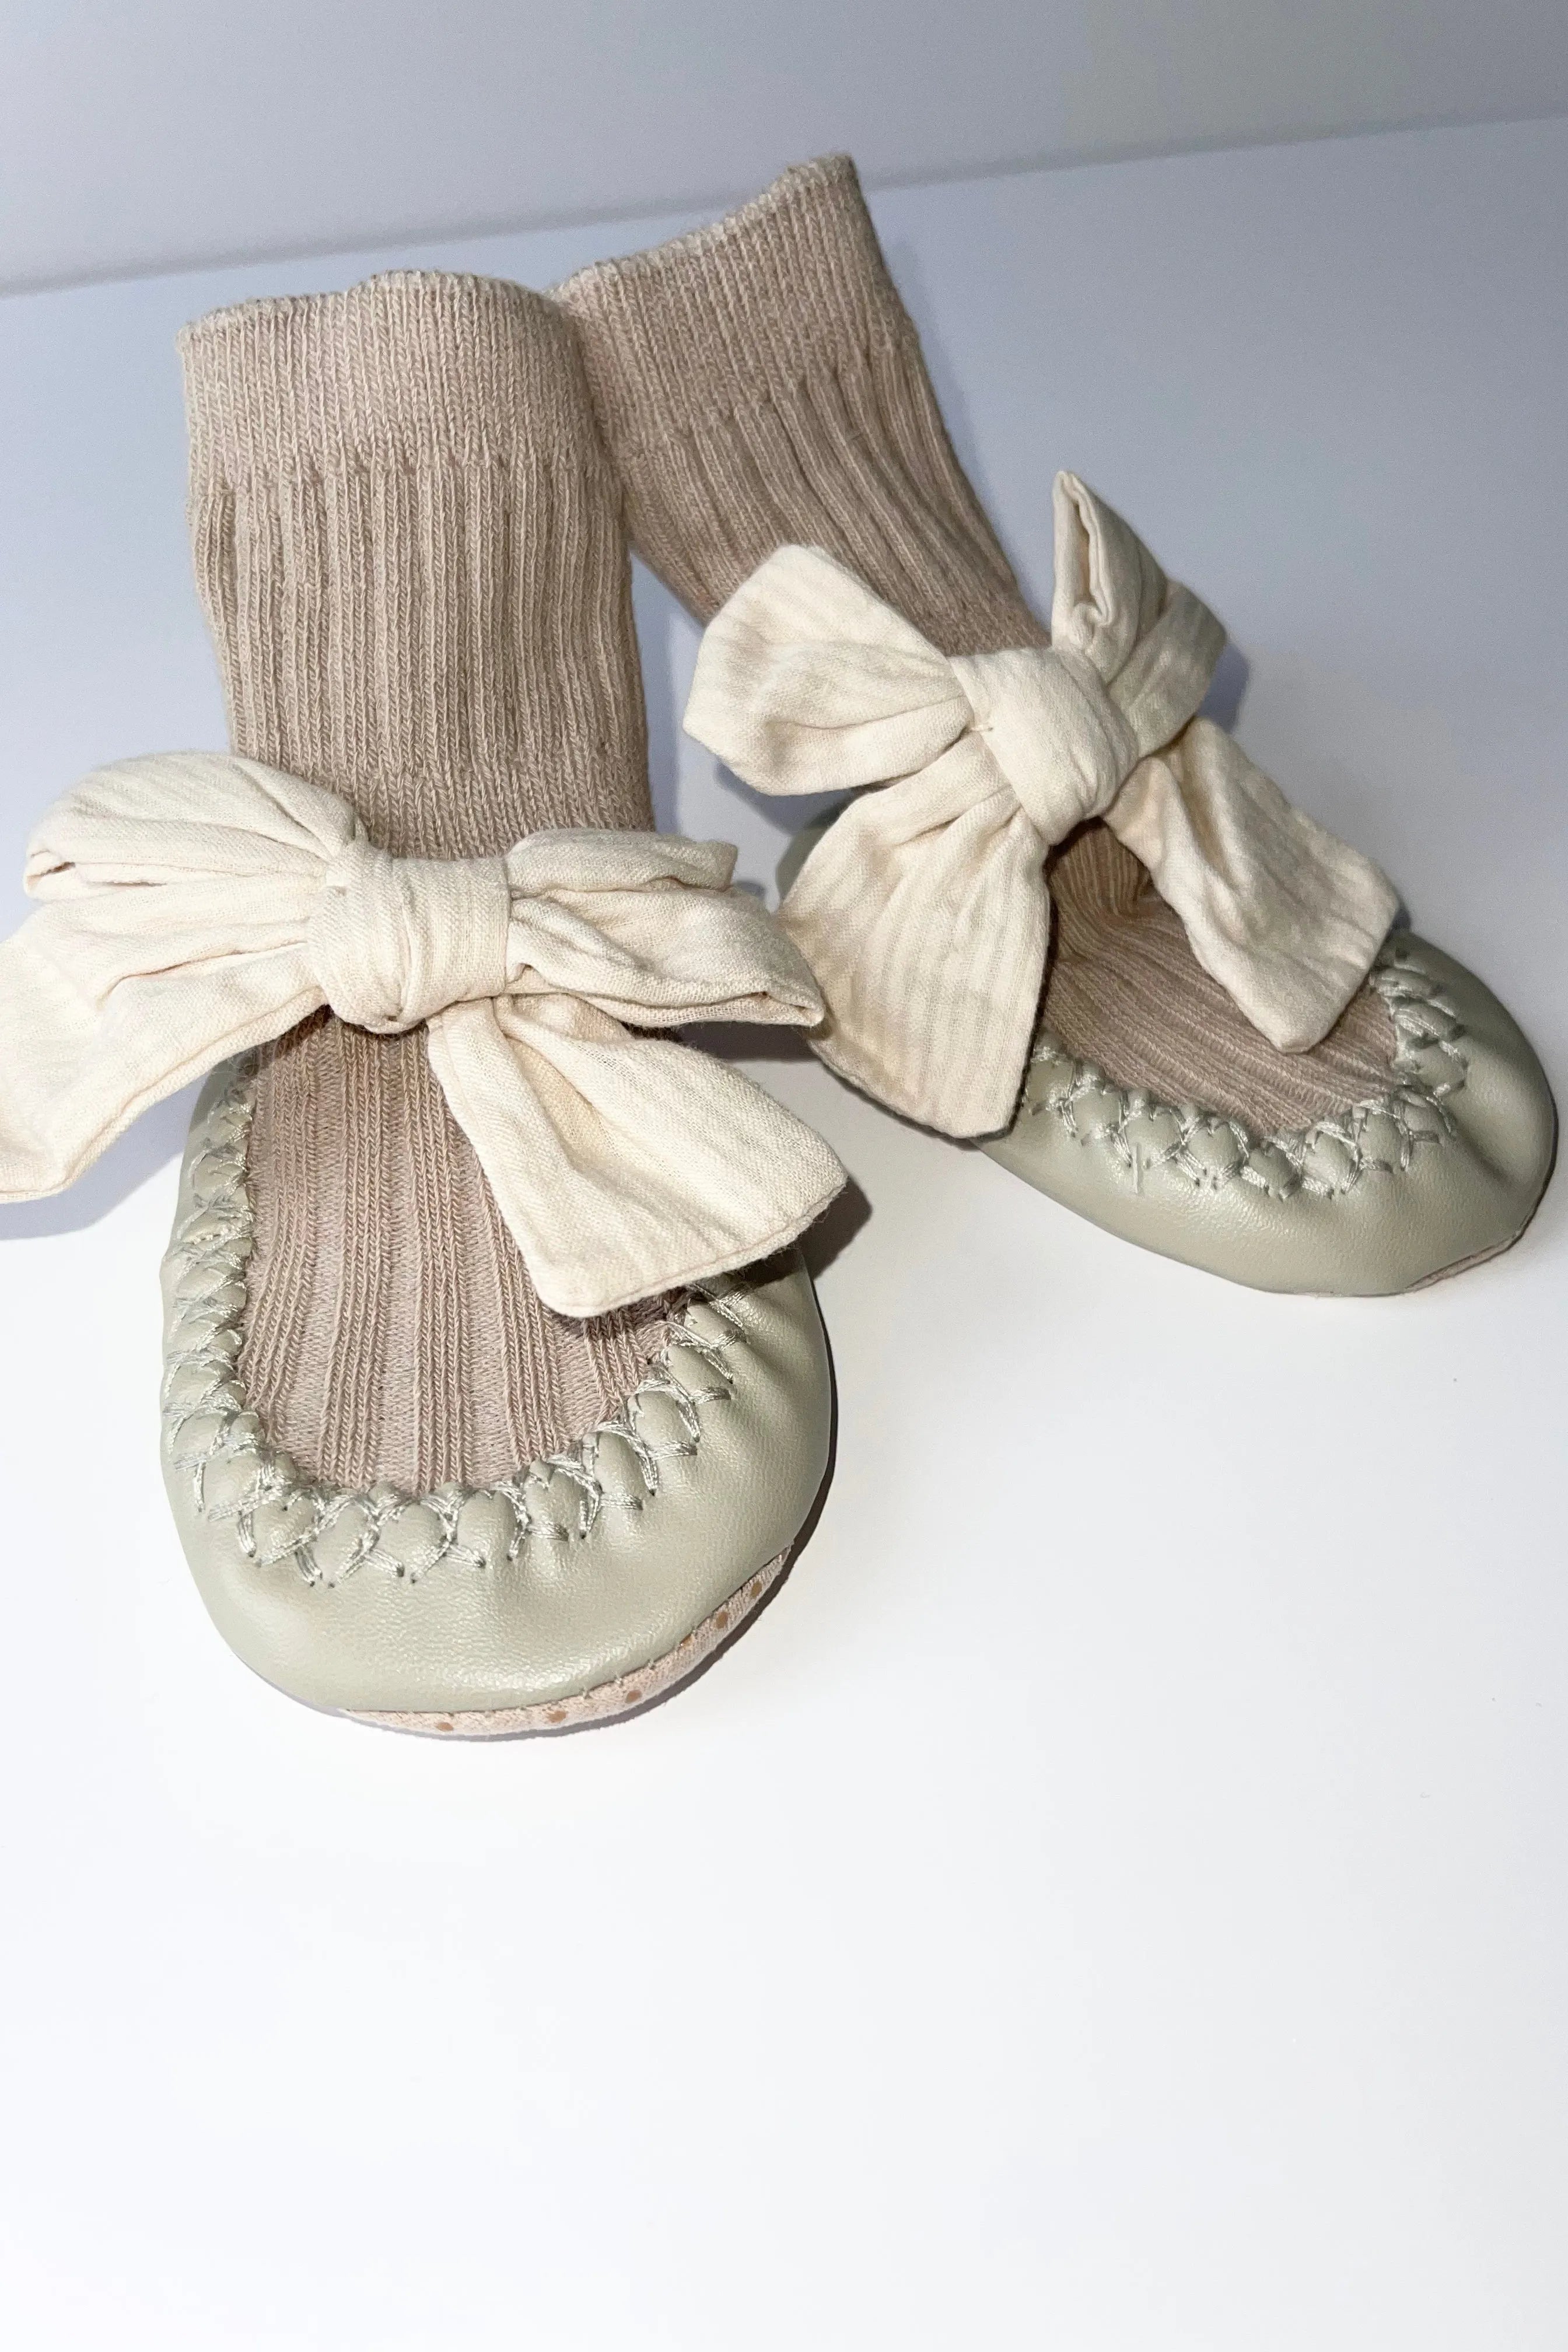 Beige/Cream Bow Baby Pram Boots - dainty delilah spanish childrens clothing